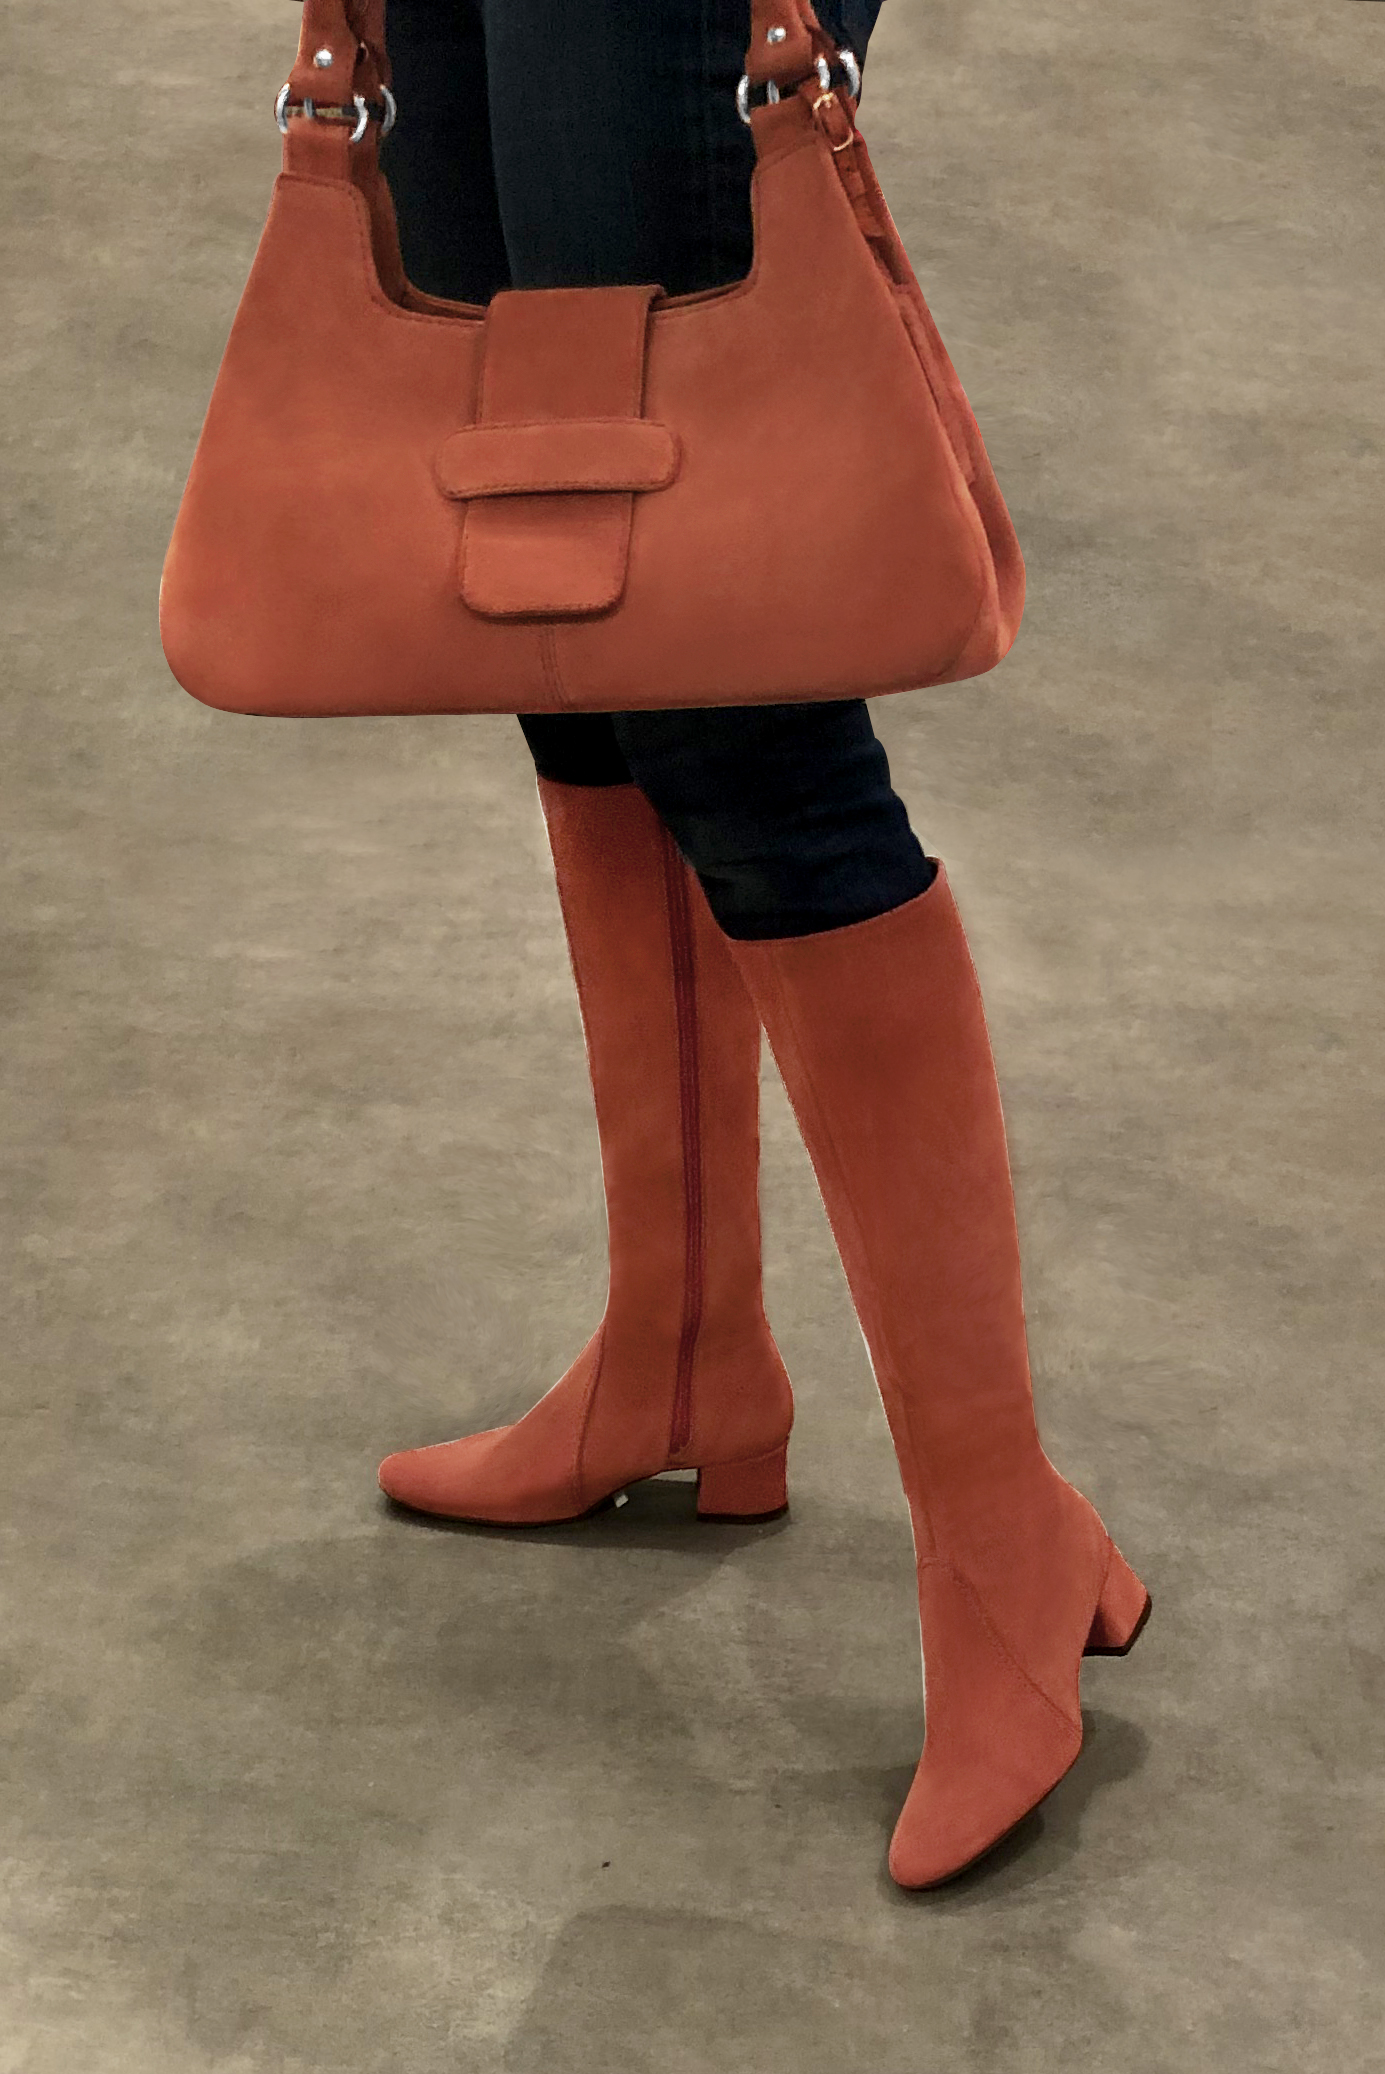 Terracotta orange women's feminine knee-high boots. Round toe. Low flare heels. Made to measure. Worn view - Florence KOOIJMAN